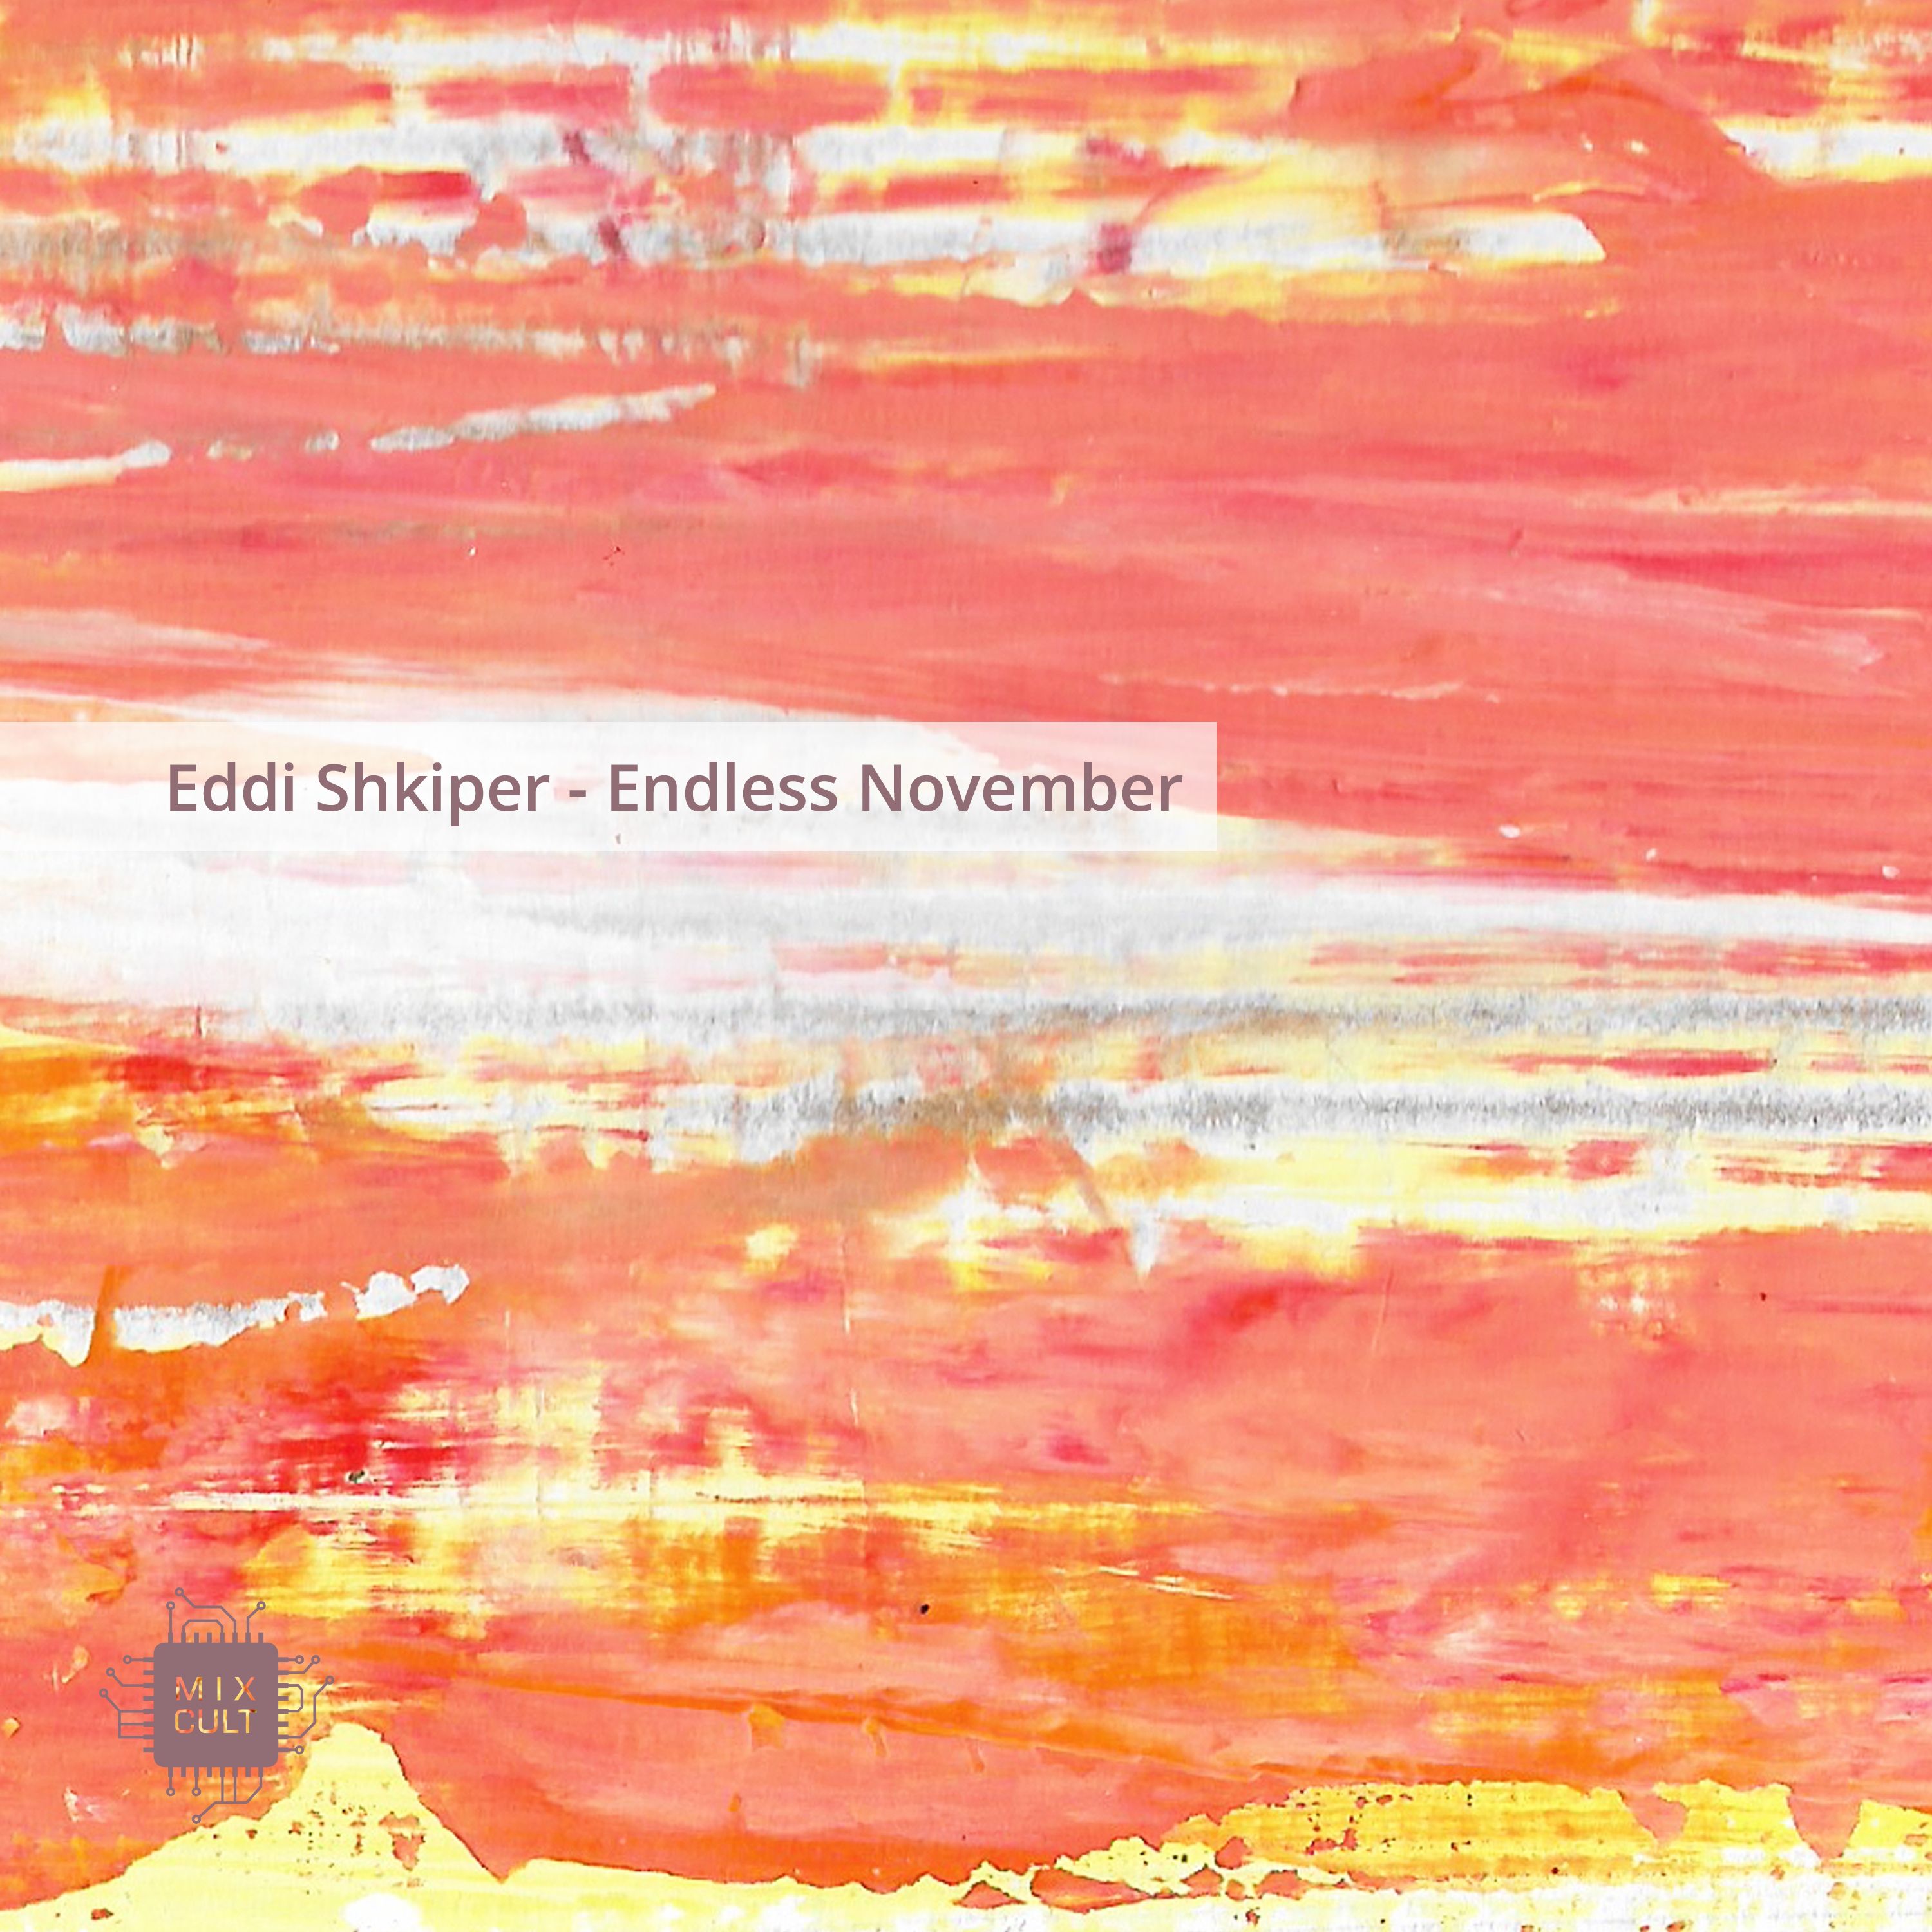 Pobierać PREMIERE:  Eddi Shkiper - Endless November [MCD075]